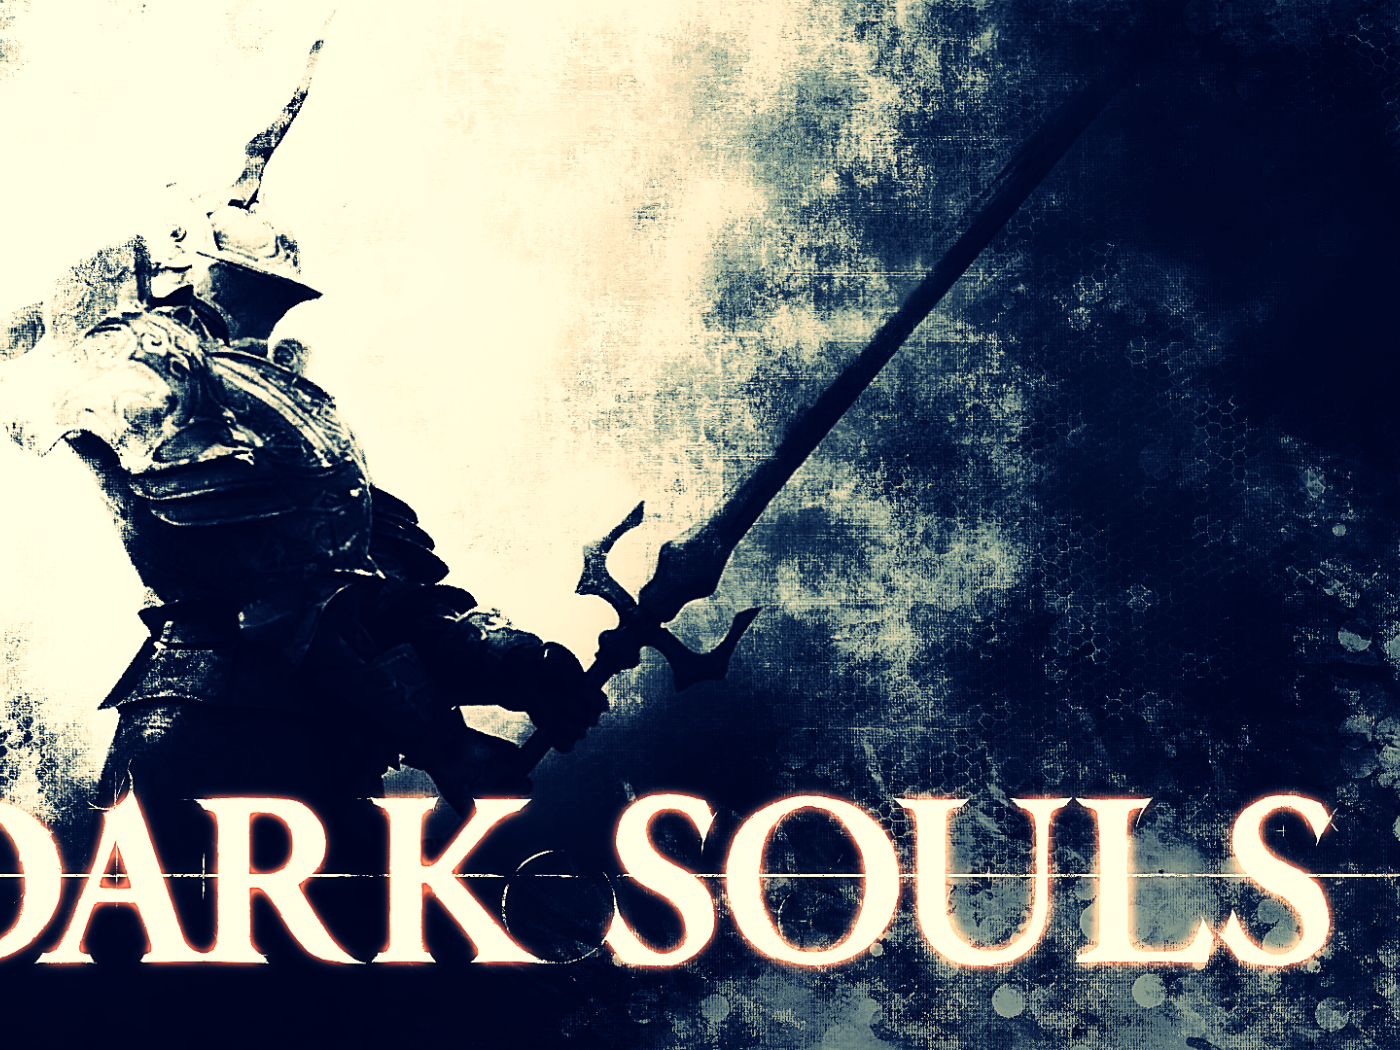 Популярная видеоигра Dark Souls